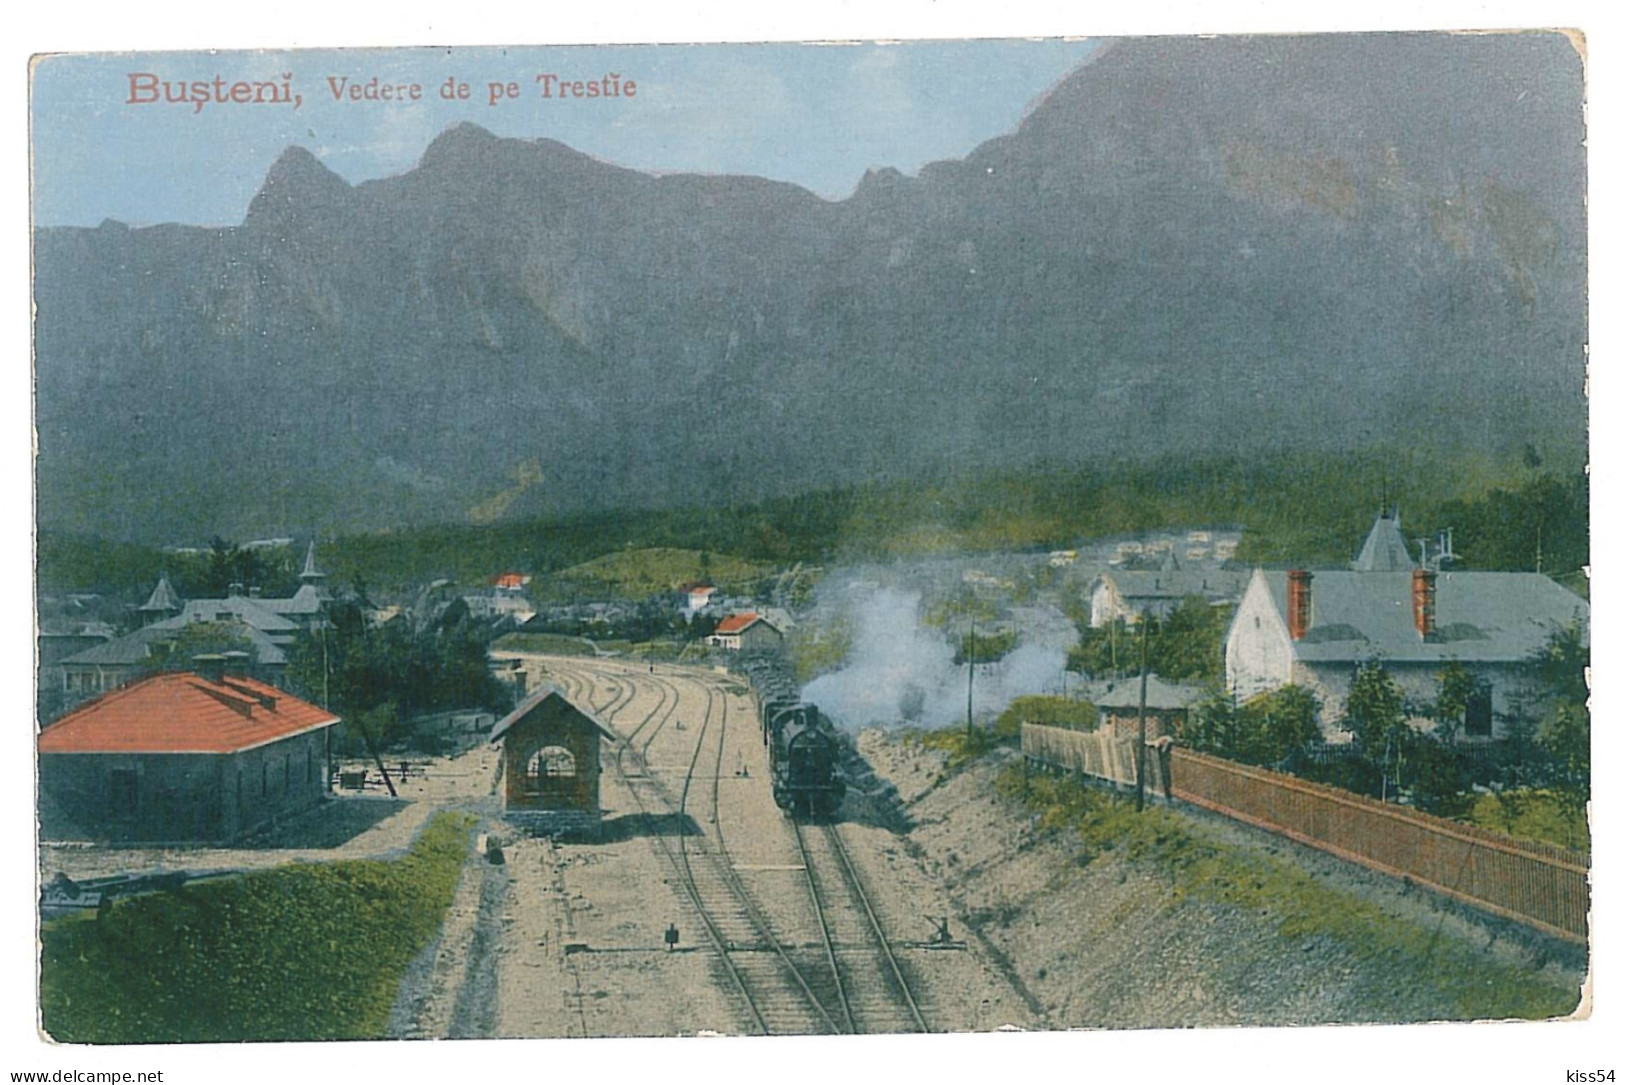 RO 38 - 10072 BUSTENI, Train In Railway Station, Romania - Old Postcard - Used - 1918 - Romania